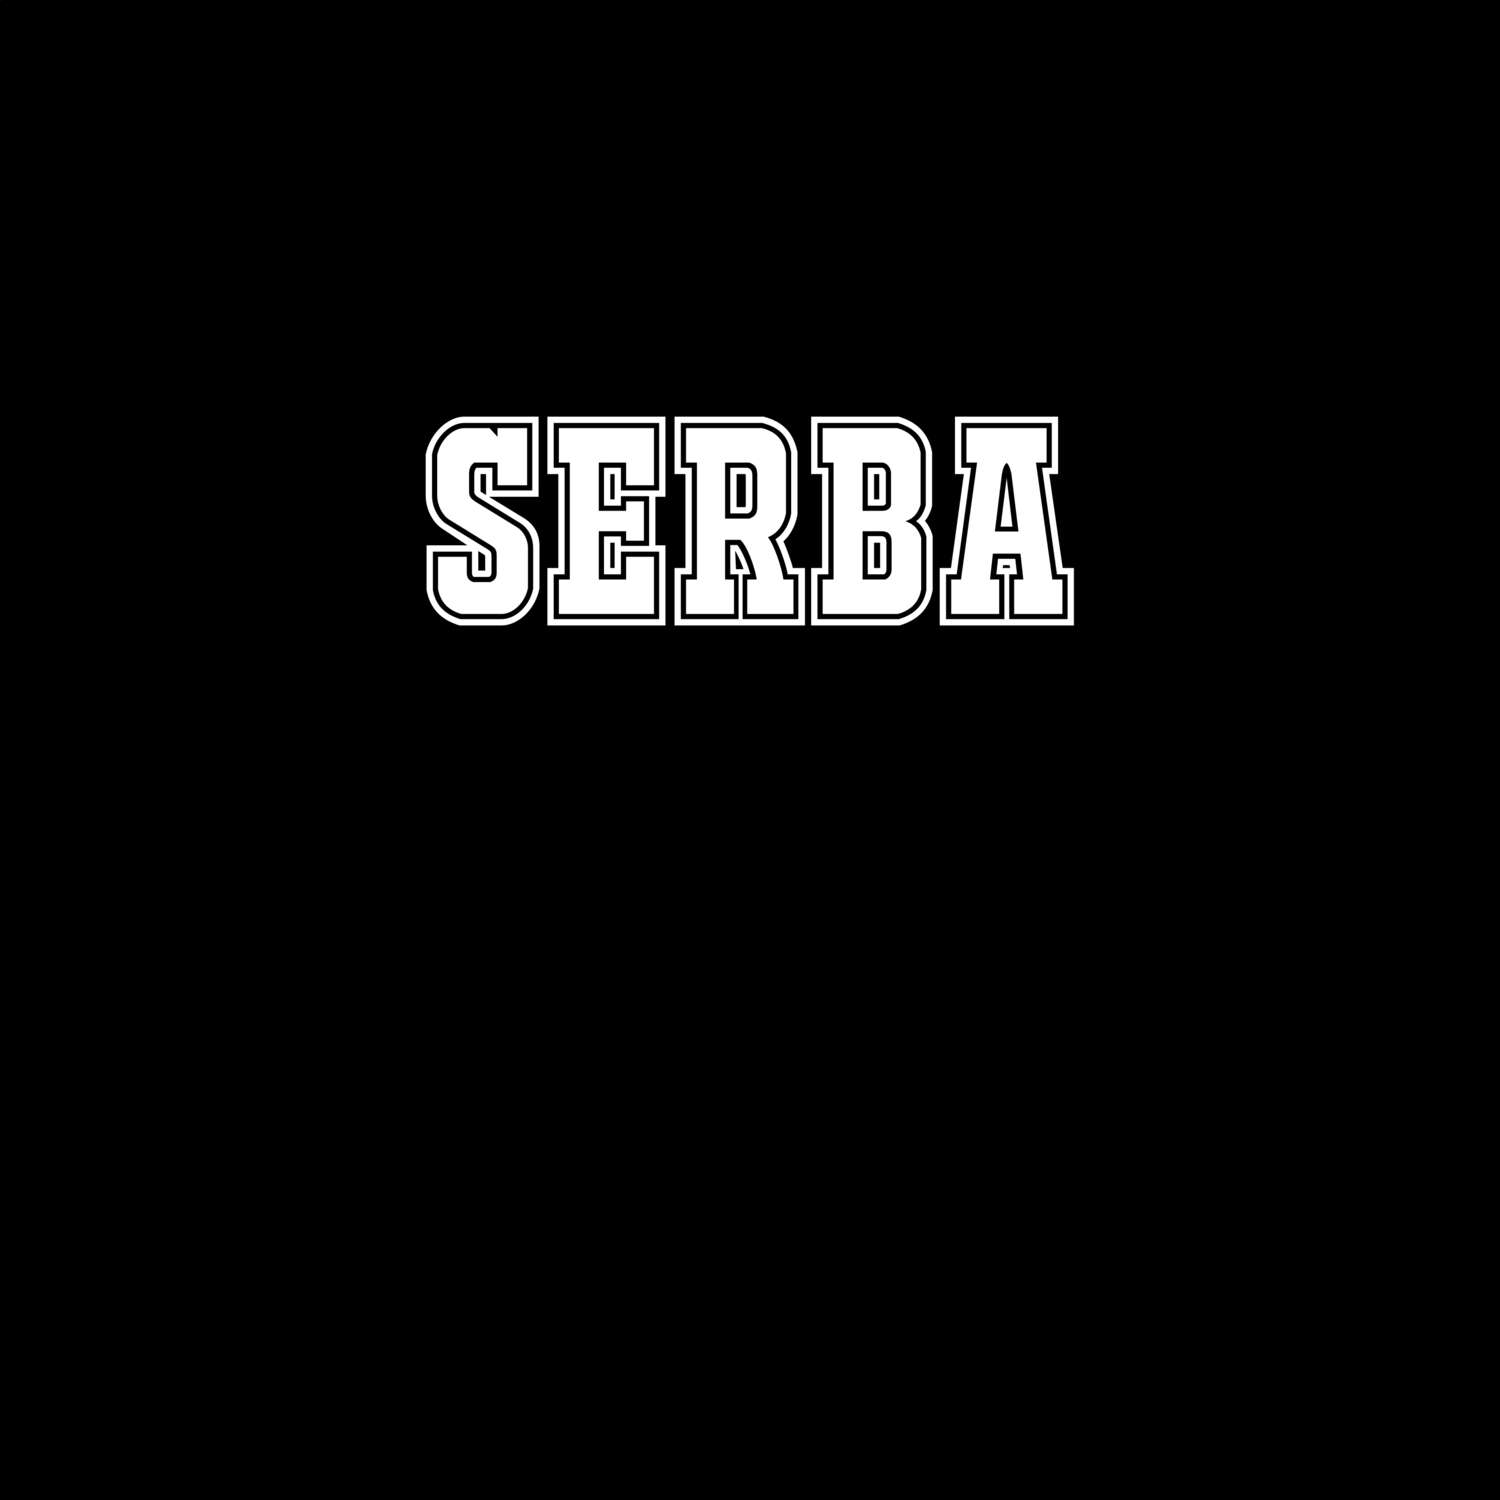 Serba T-Shirt »Classic«